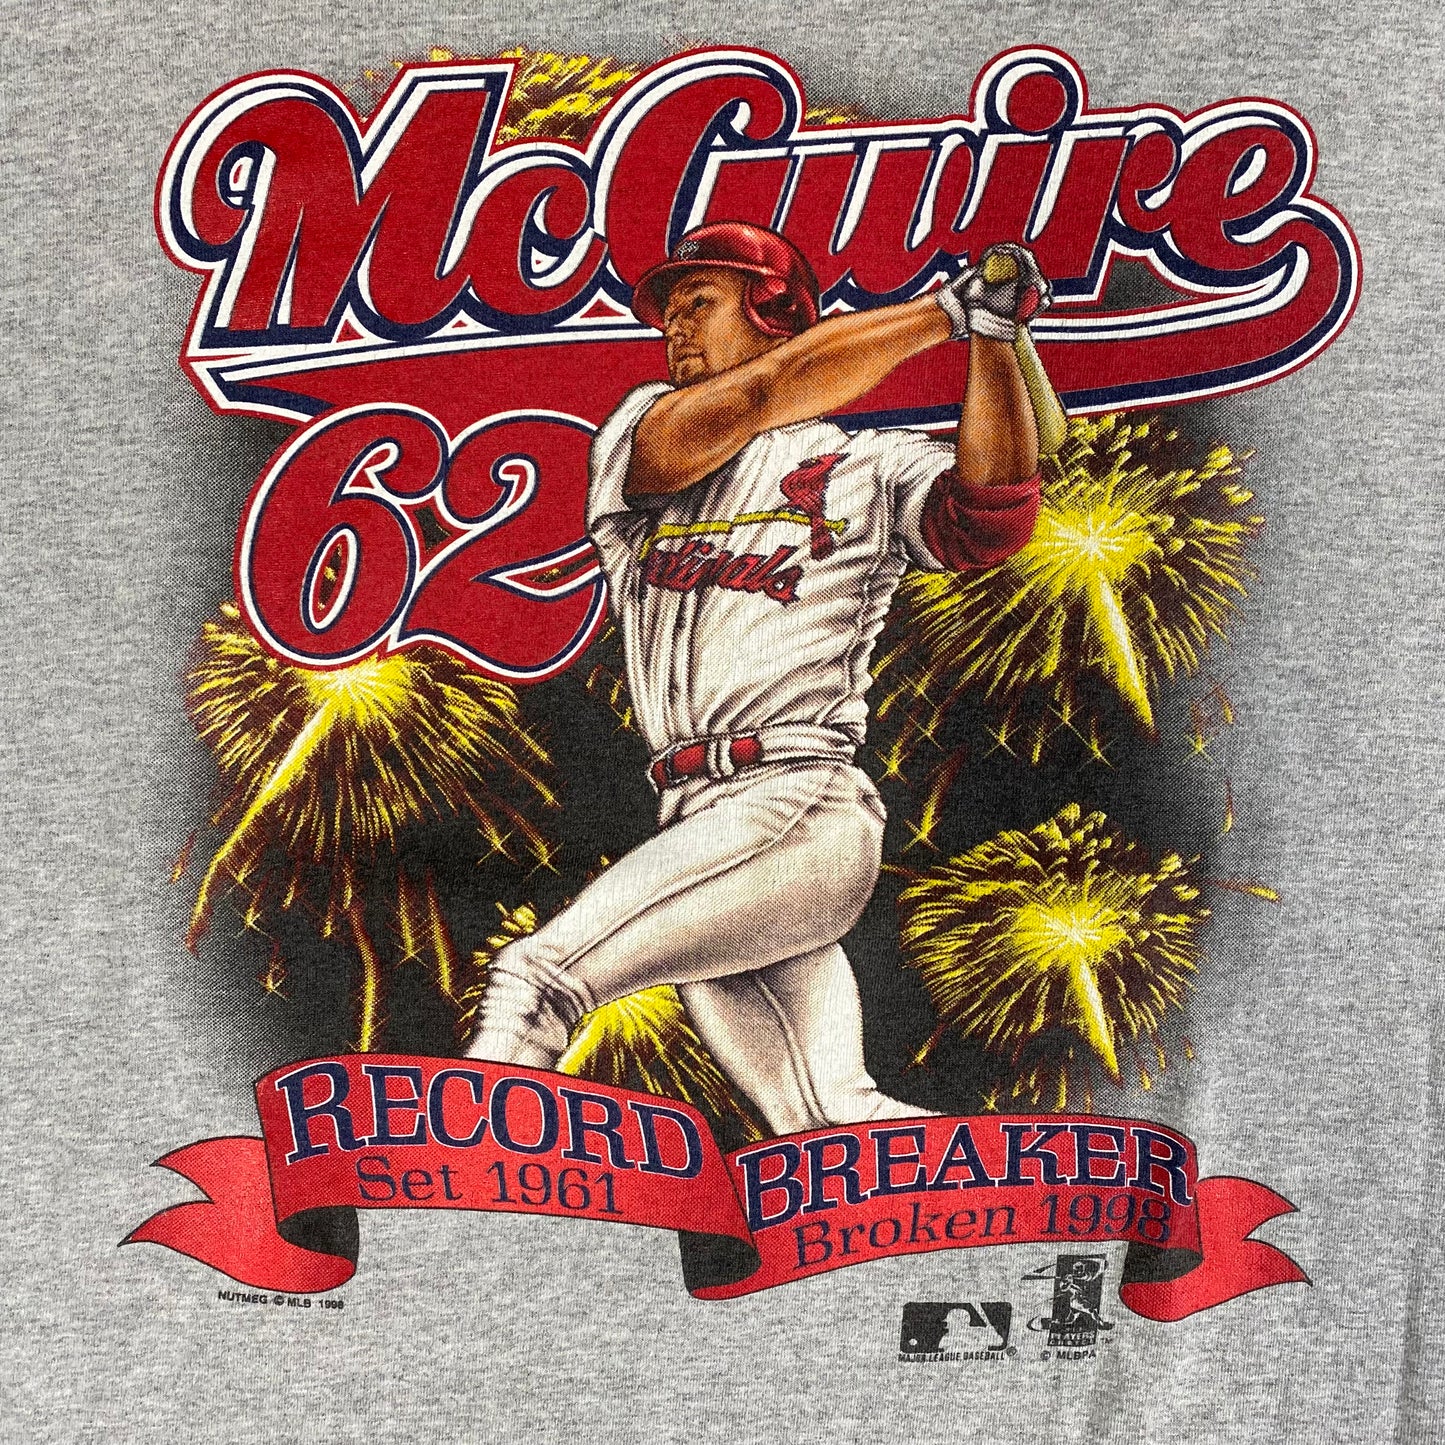 1996 Mark McGwire 62 Home Run Record T-shirt Sz 2XL (L339)